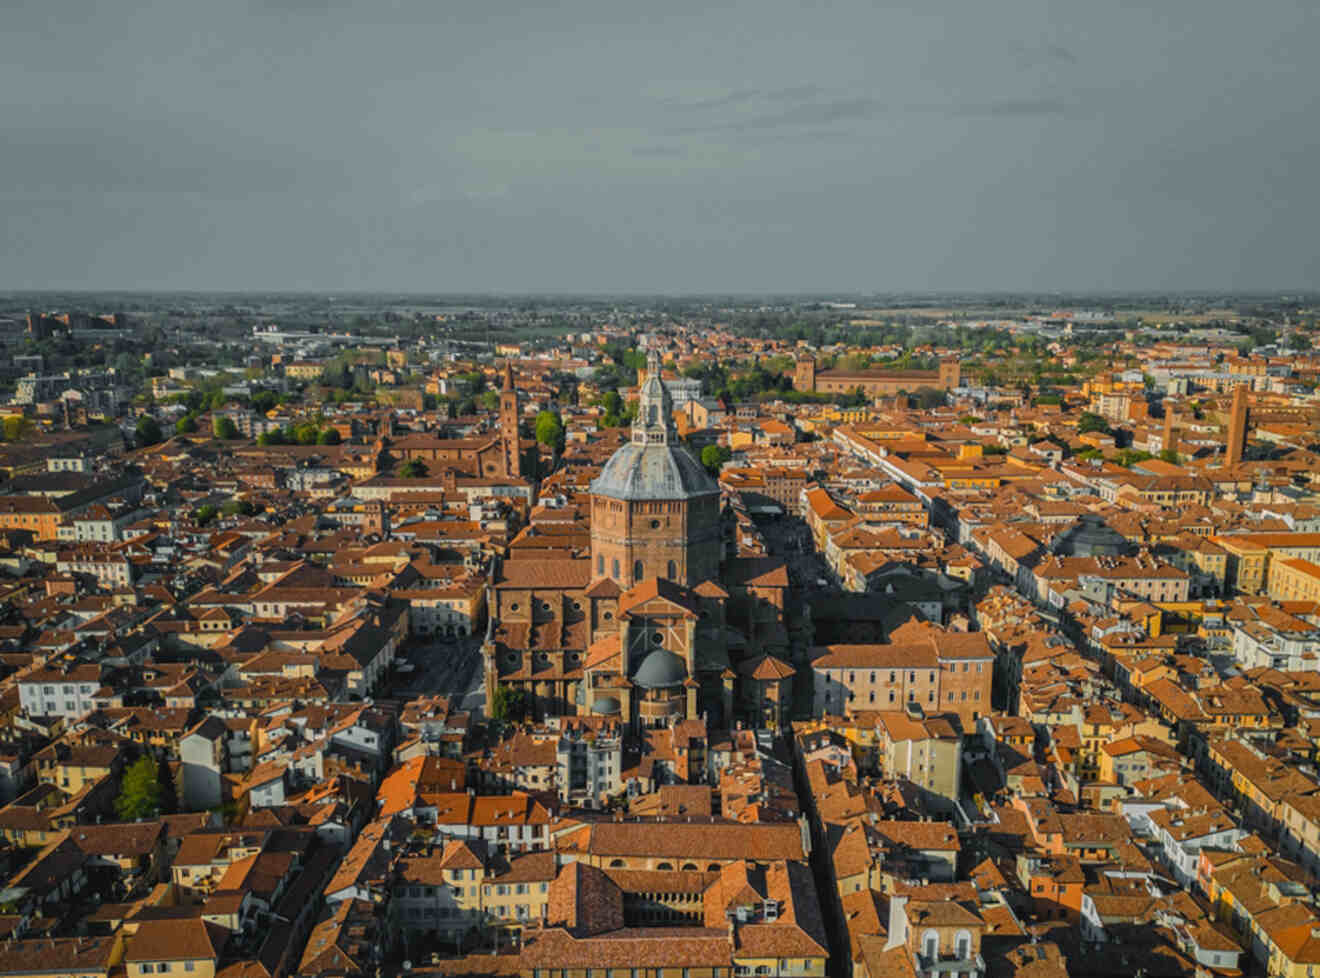 Aerial view of Pavia